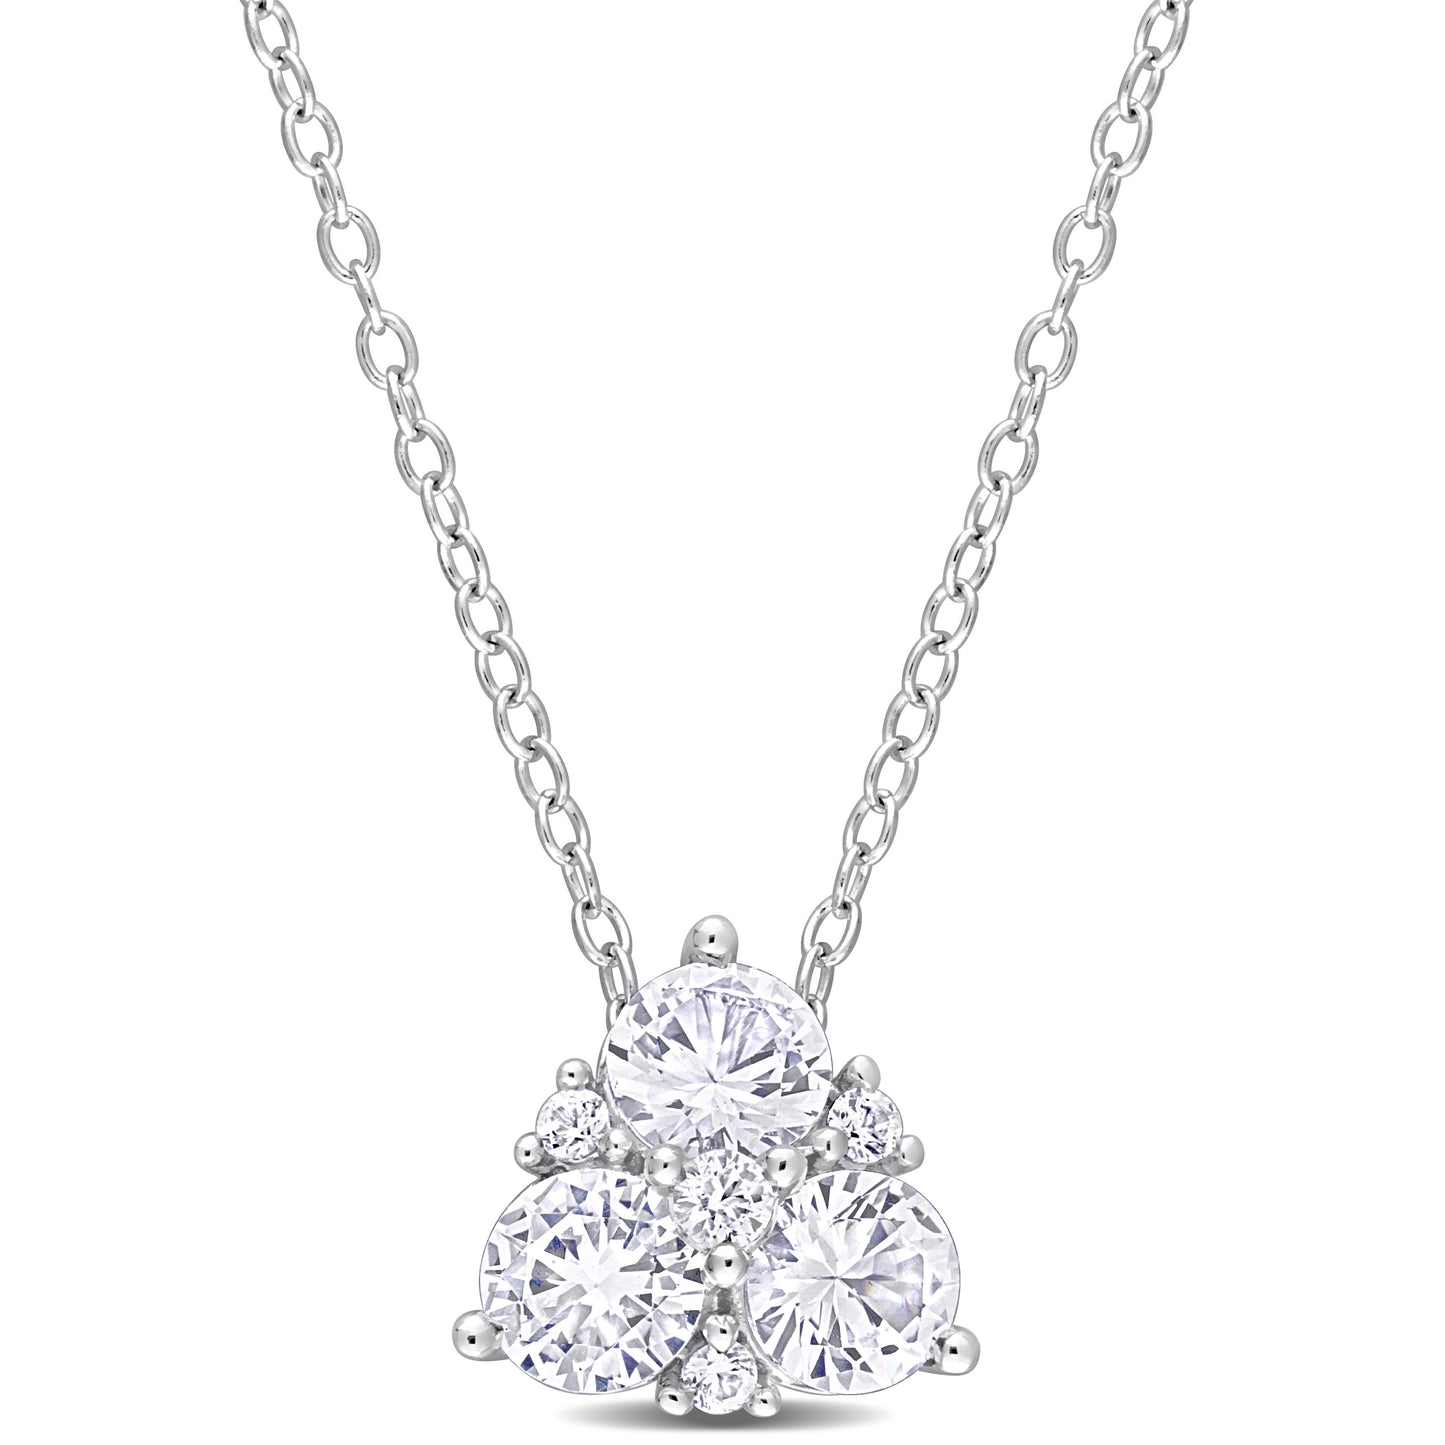 1 1/2 ct TGW Created white sapphire fashion pendant with chain silver